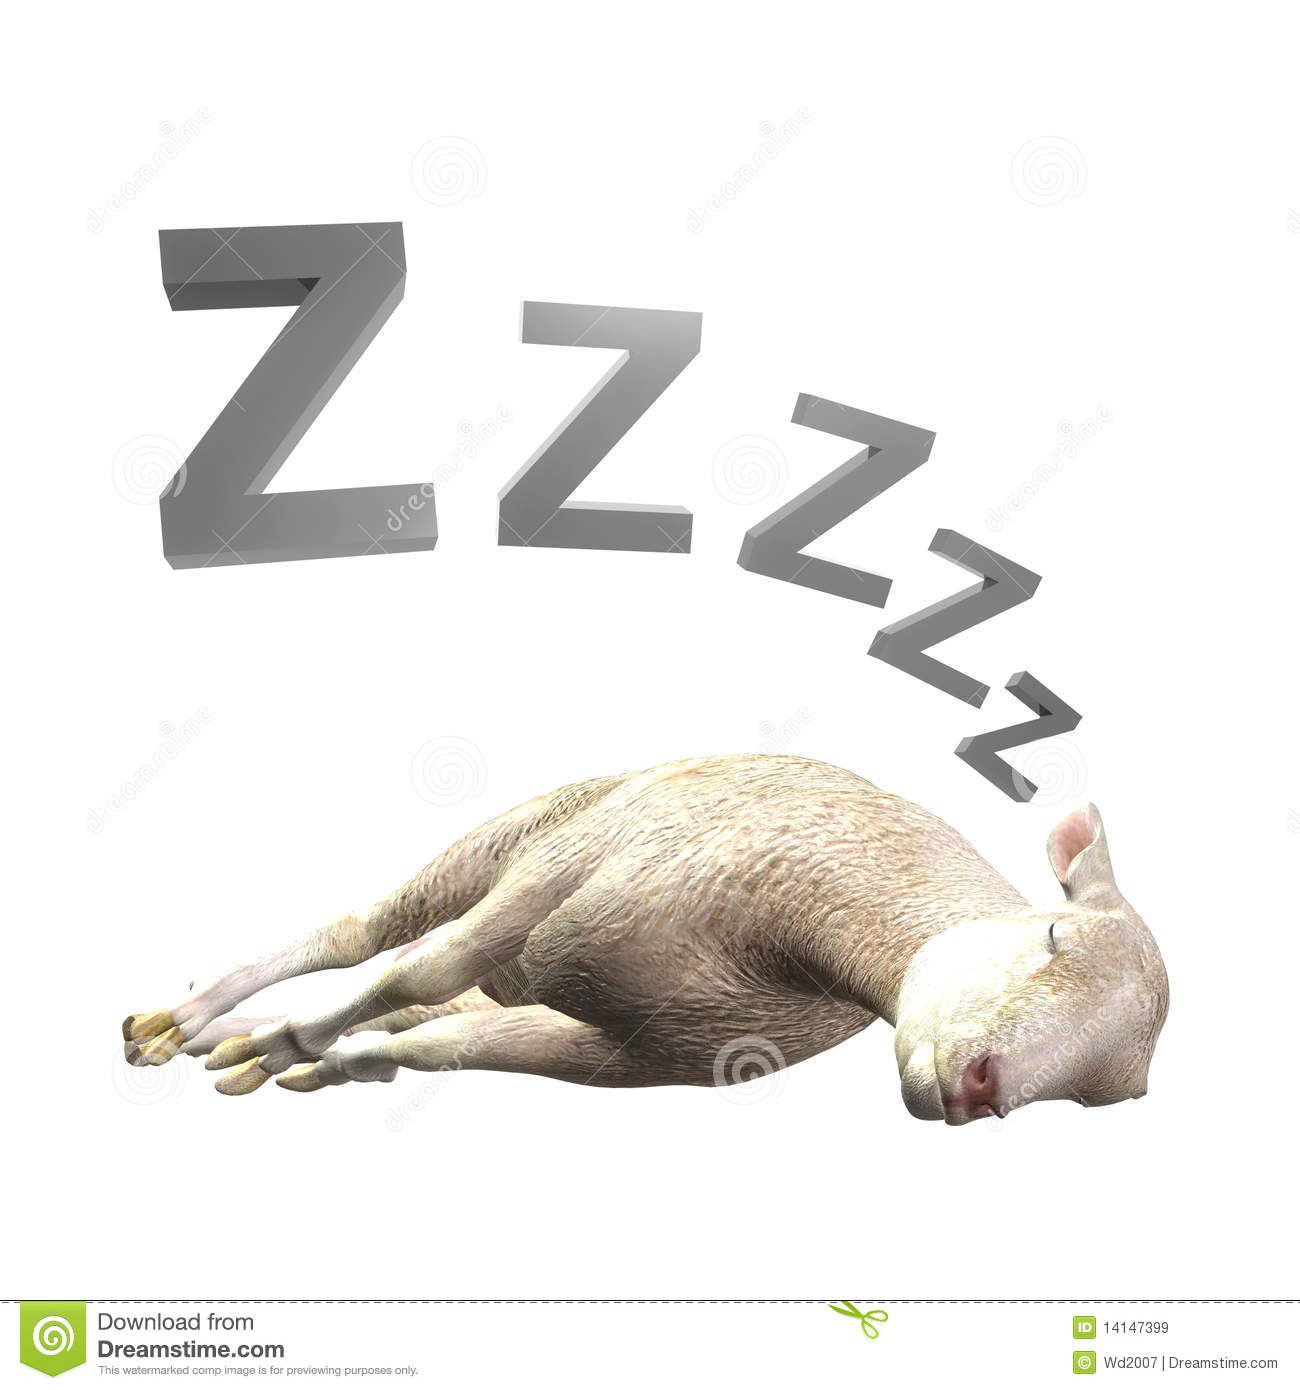 Sleeping Sheep Or Lamb Illustration Royalty Free Stock Images   Image